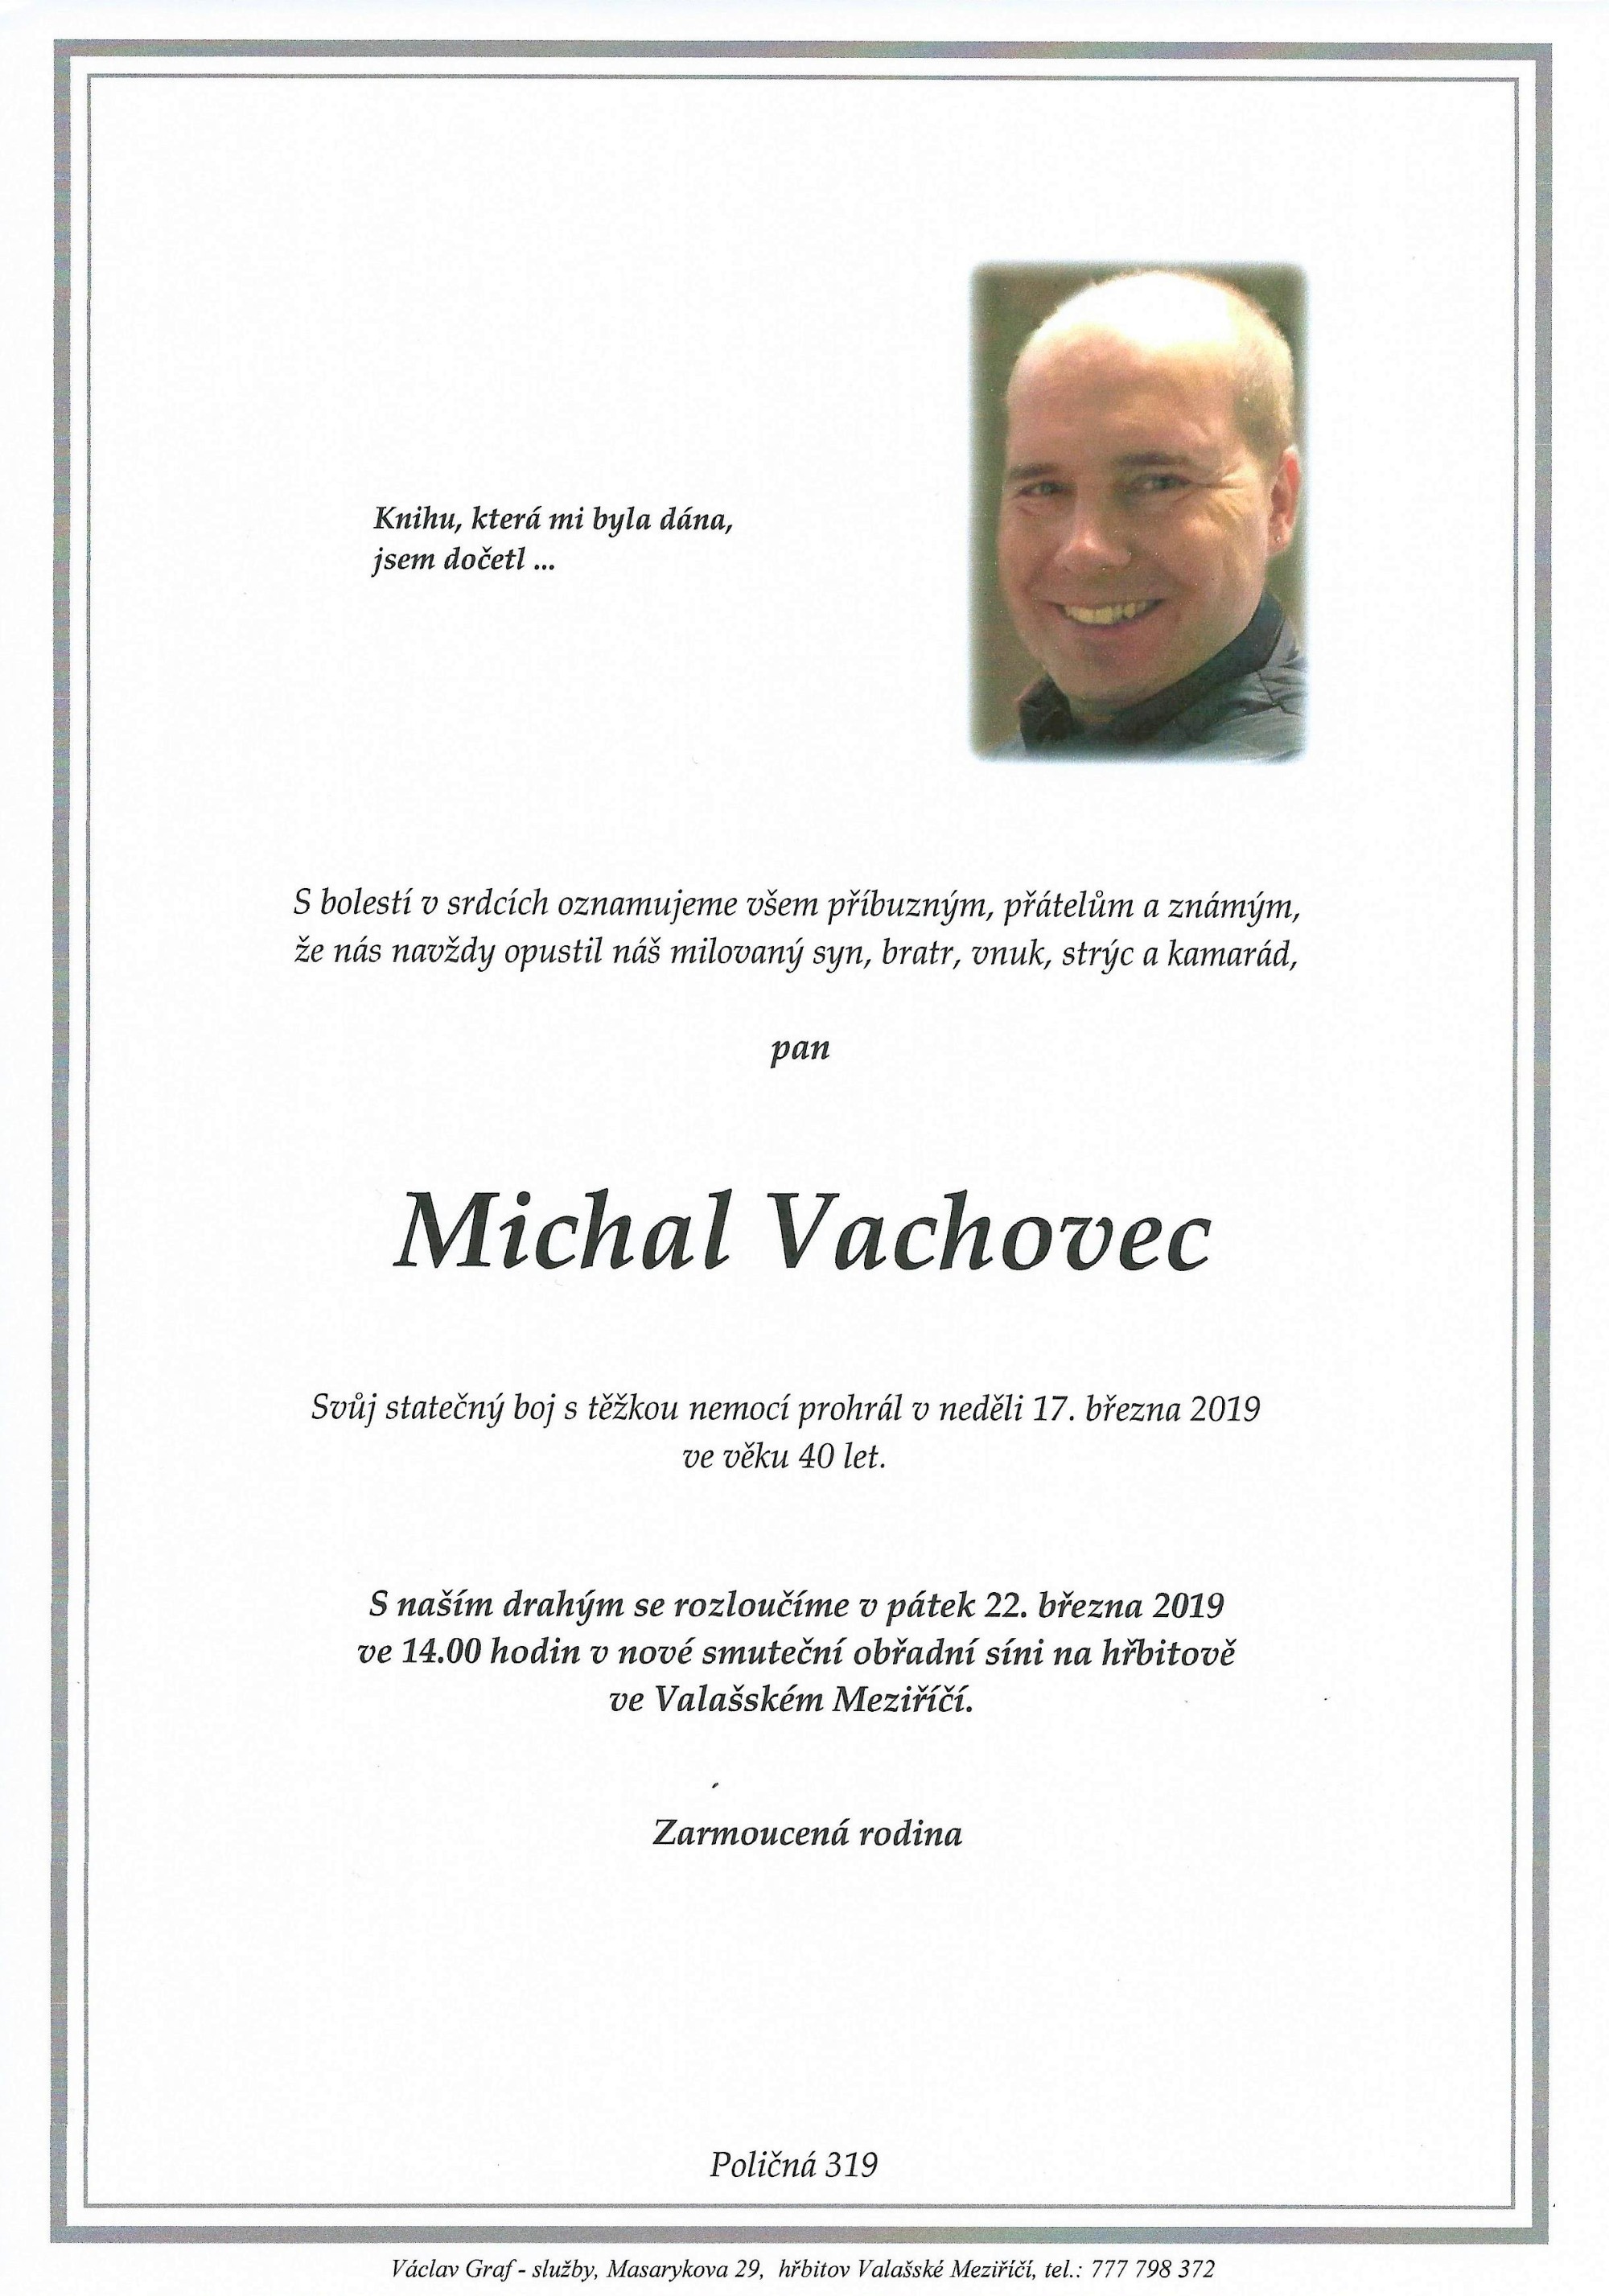 Michal Vachovec